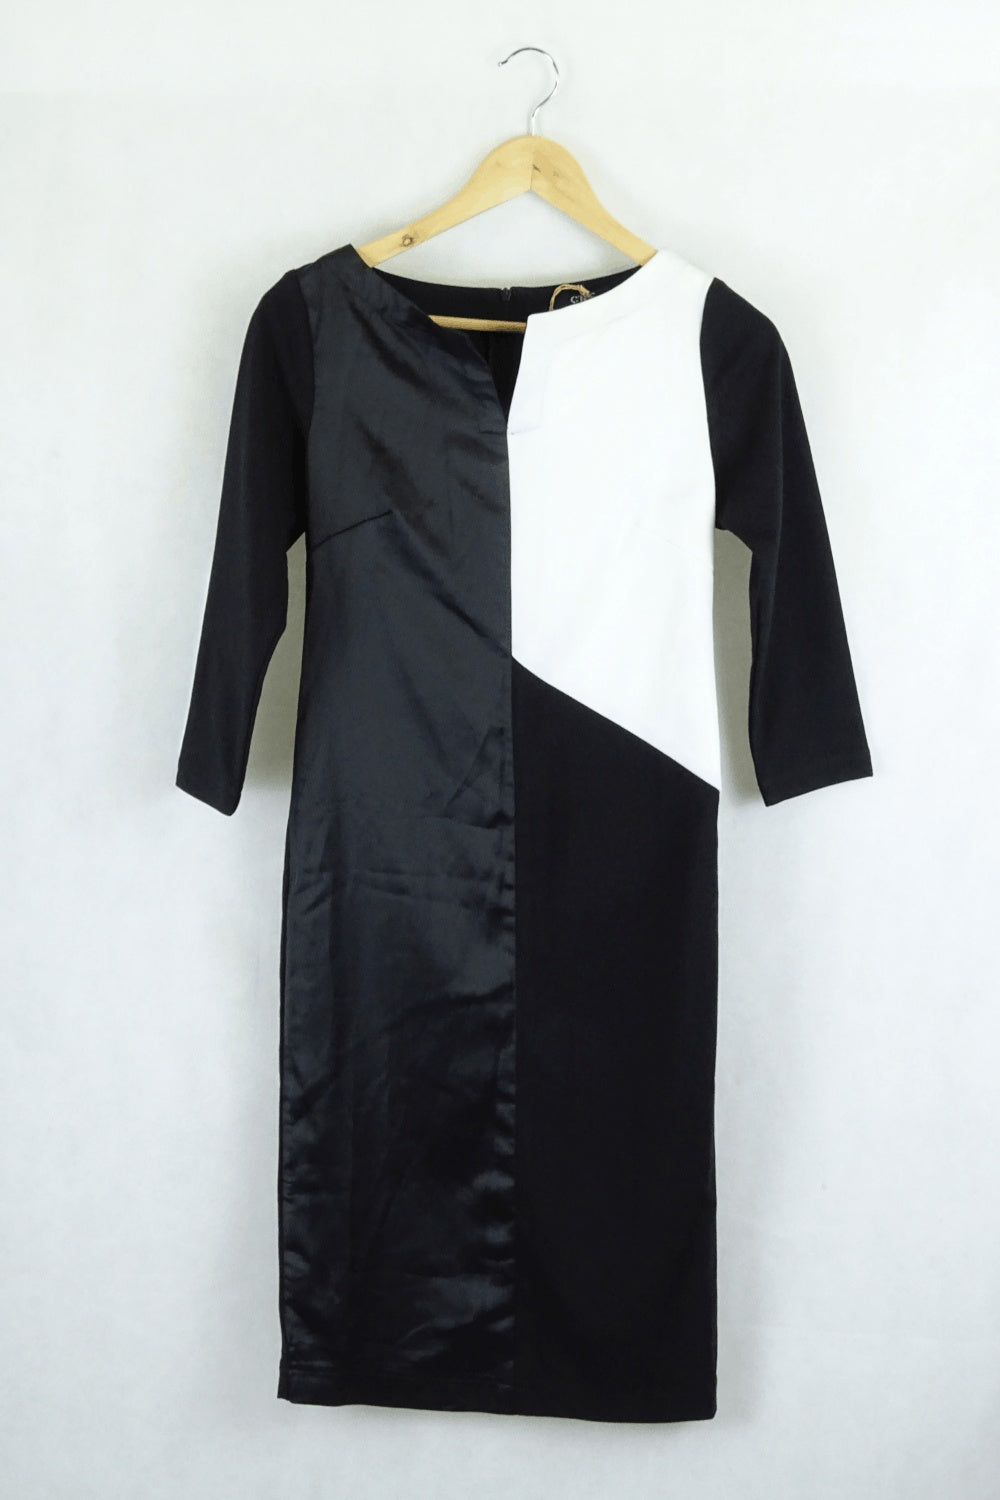 Costume National Black And White Dress 38 (Au 8)